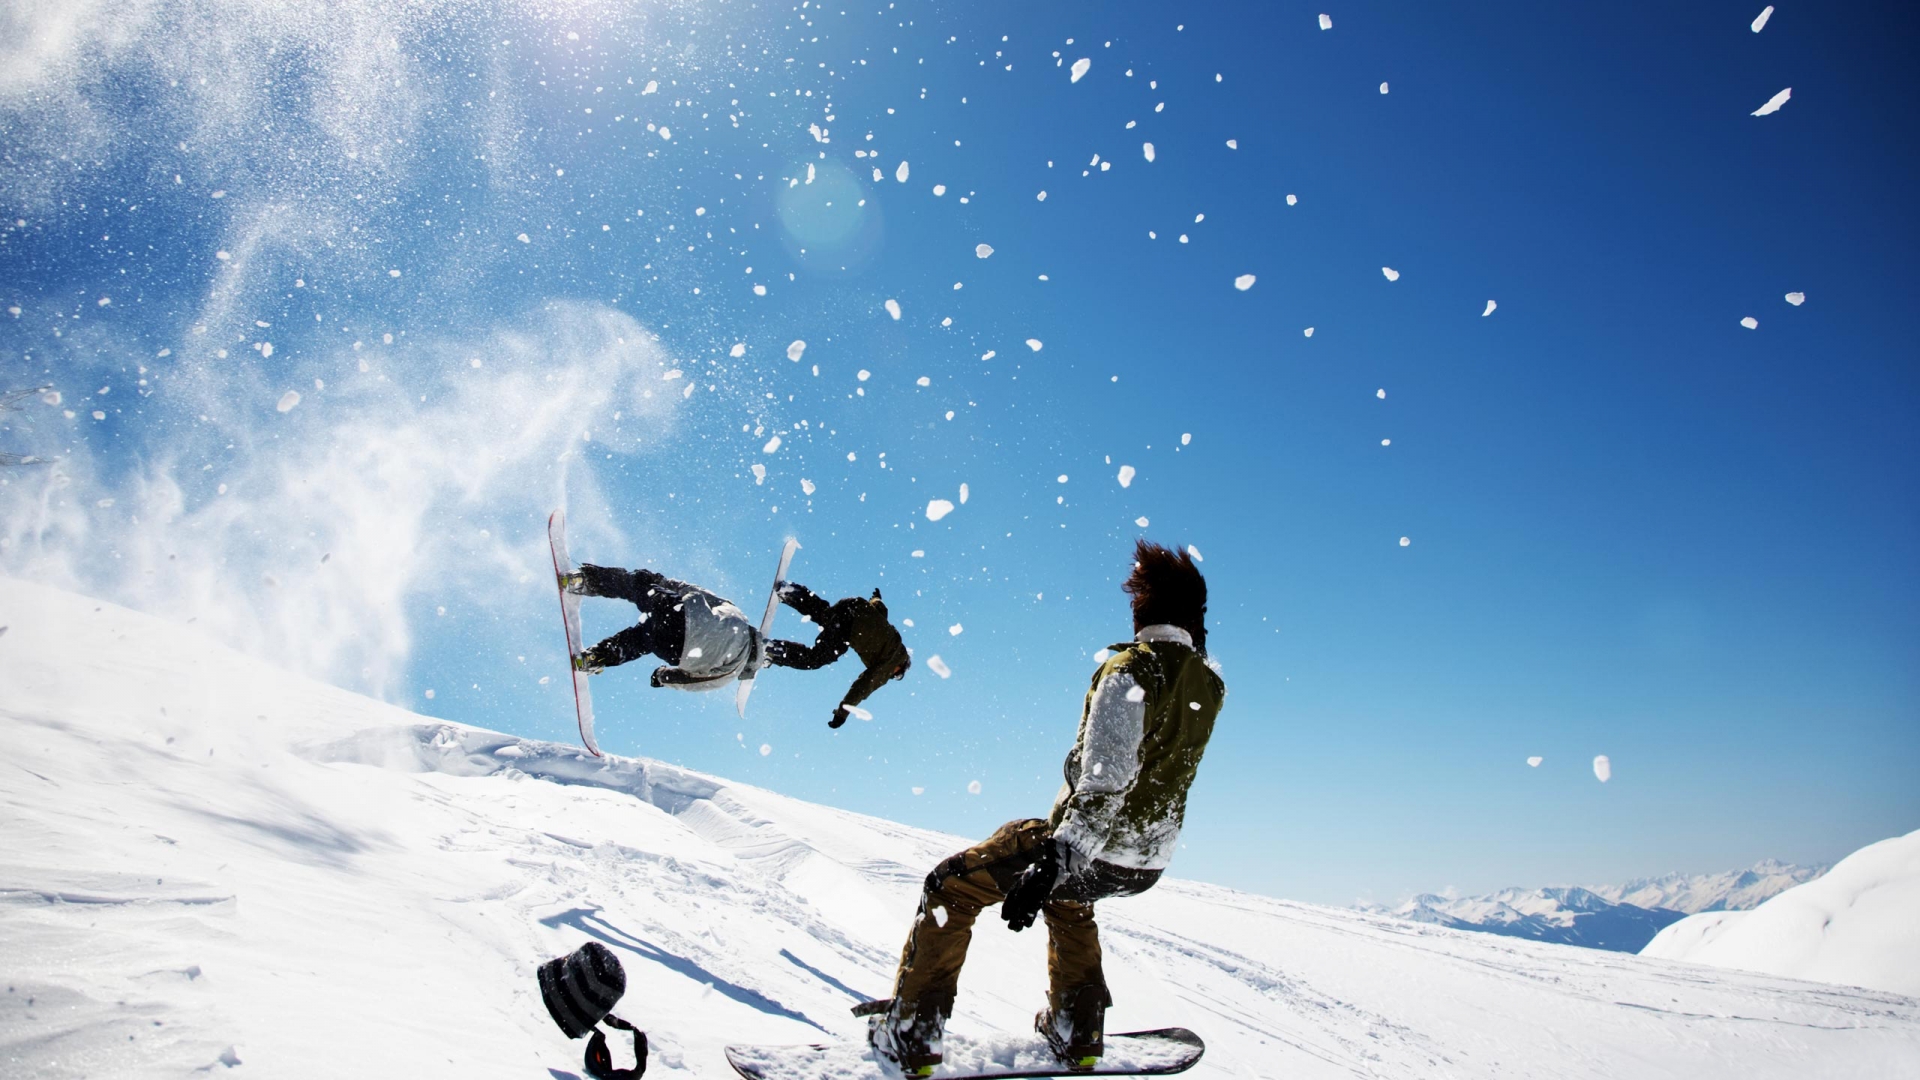 Winter Snowboarding for 1920 x 1080 HDTV 1080p resolution